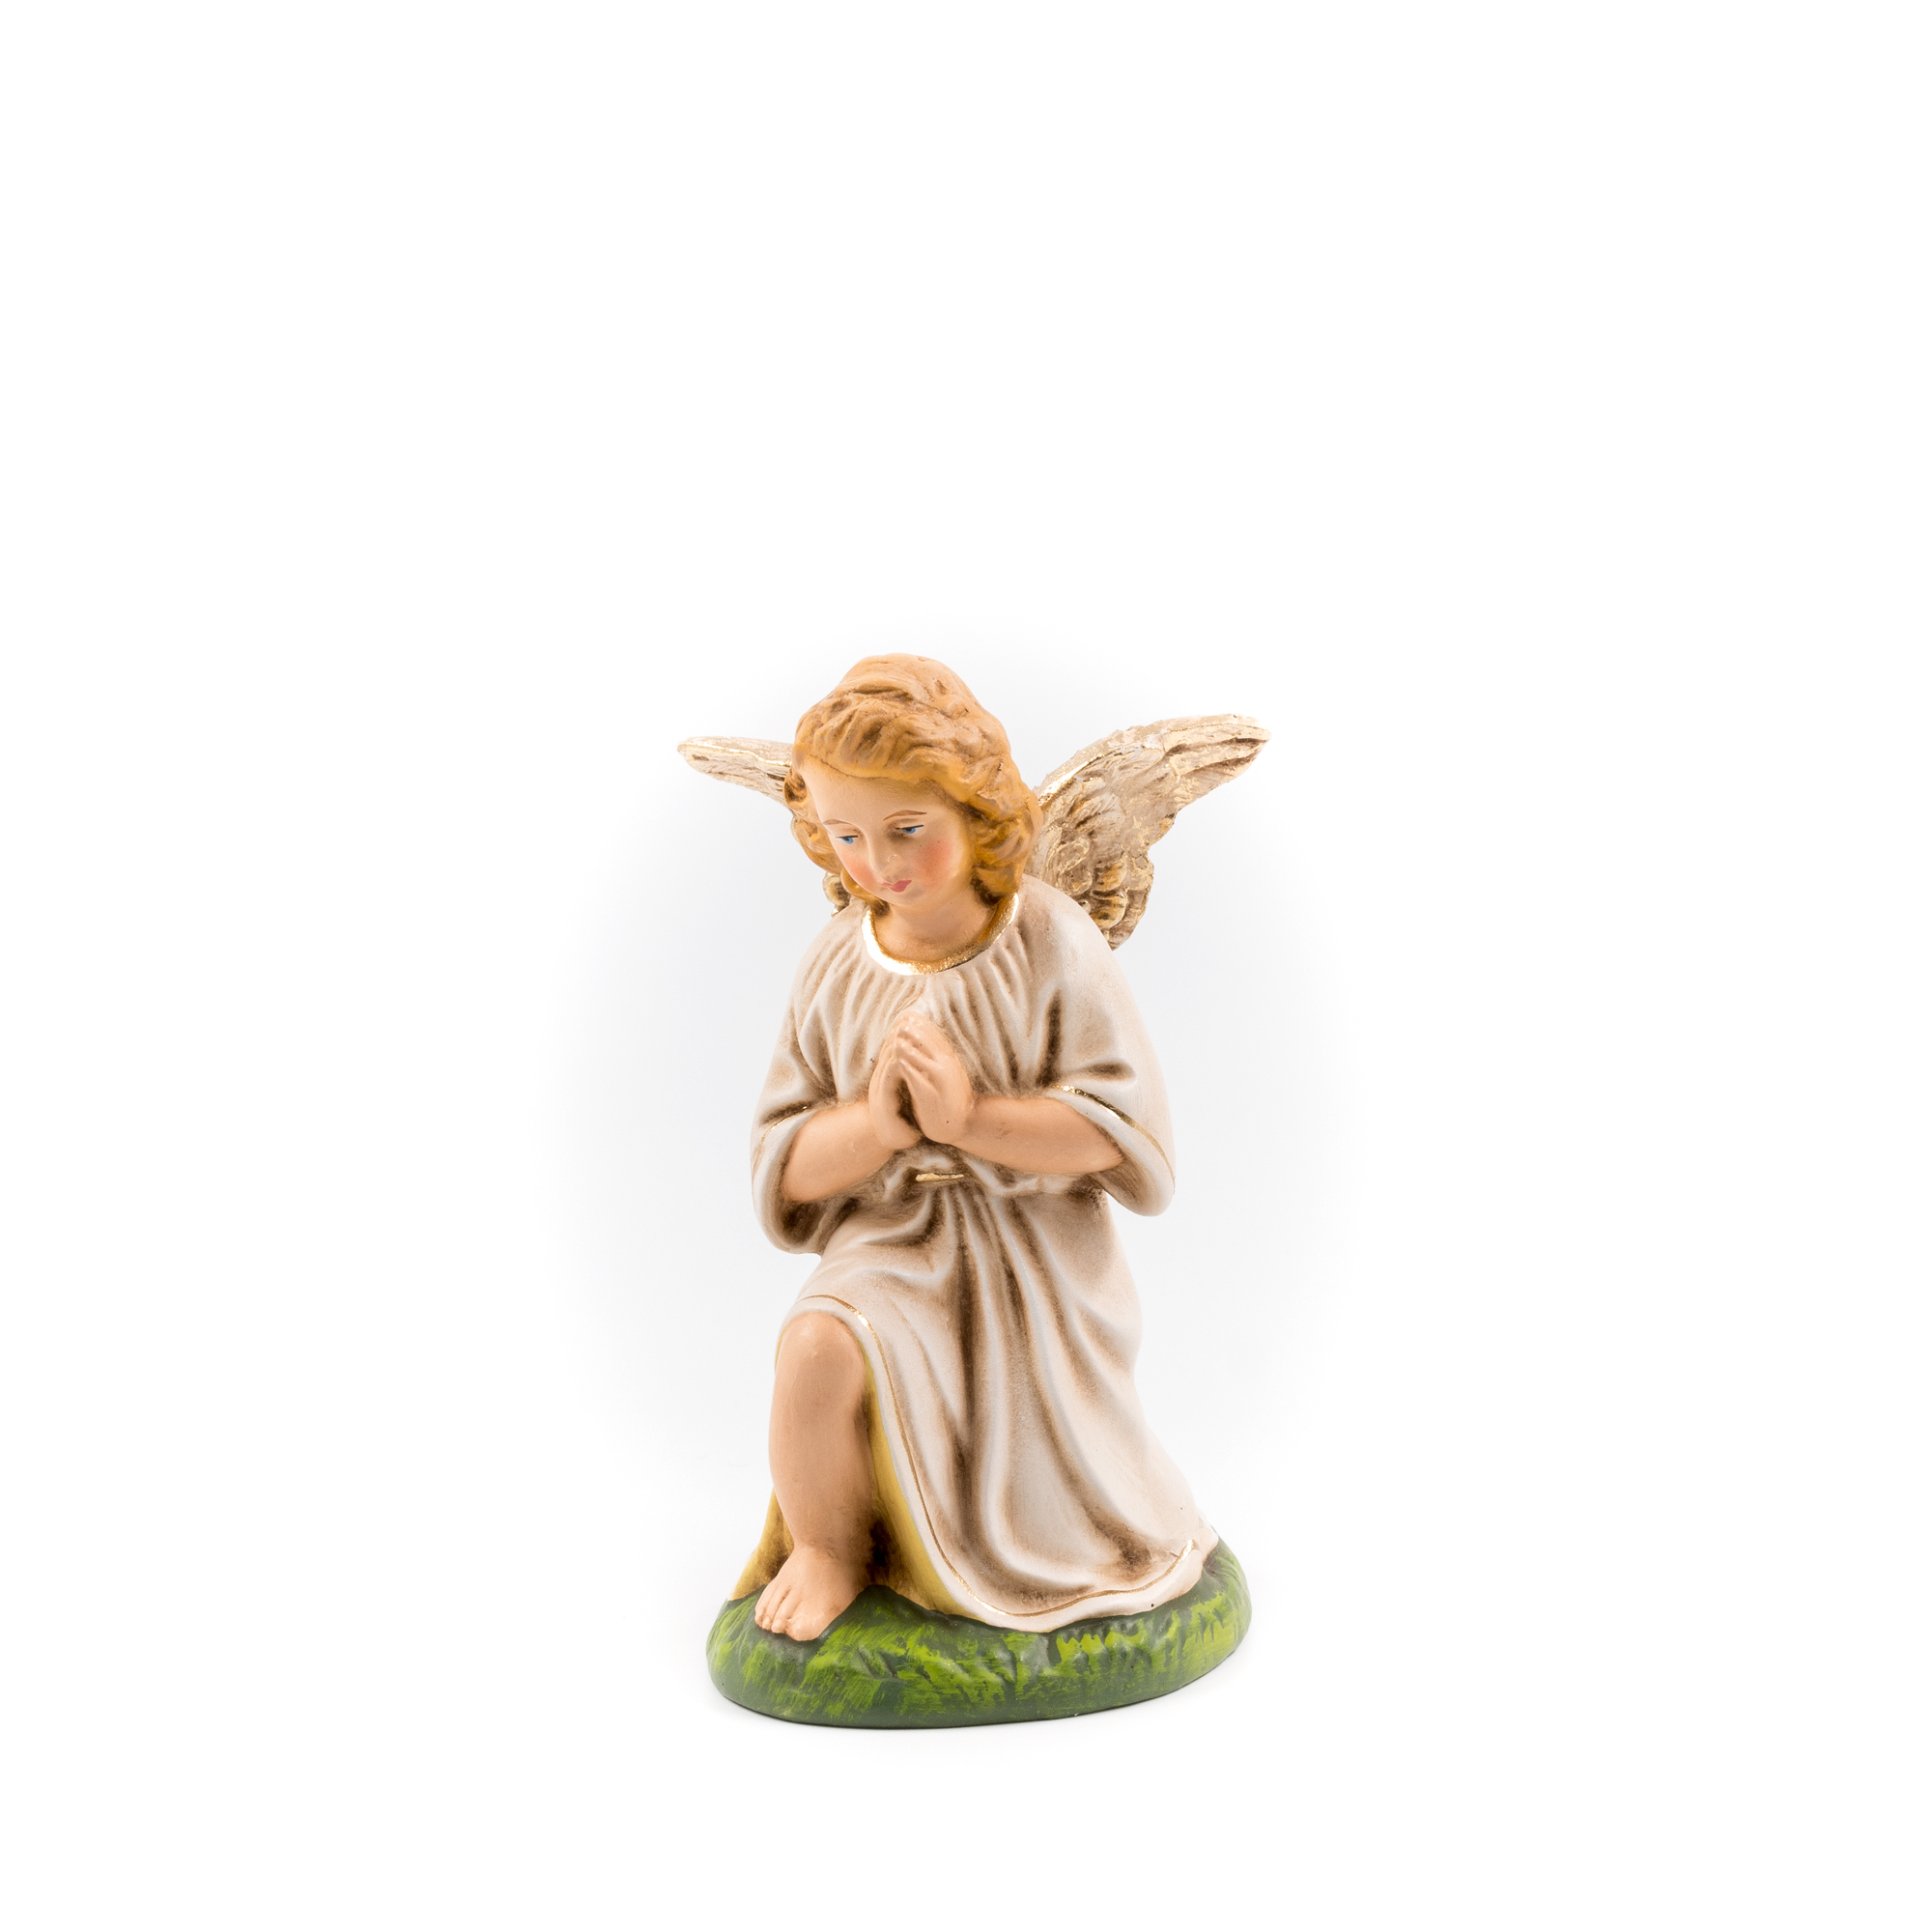 Kneeling angel, antique white, to 6.75 in. figures